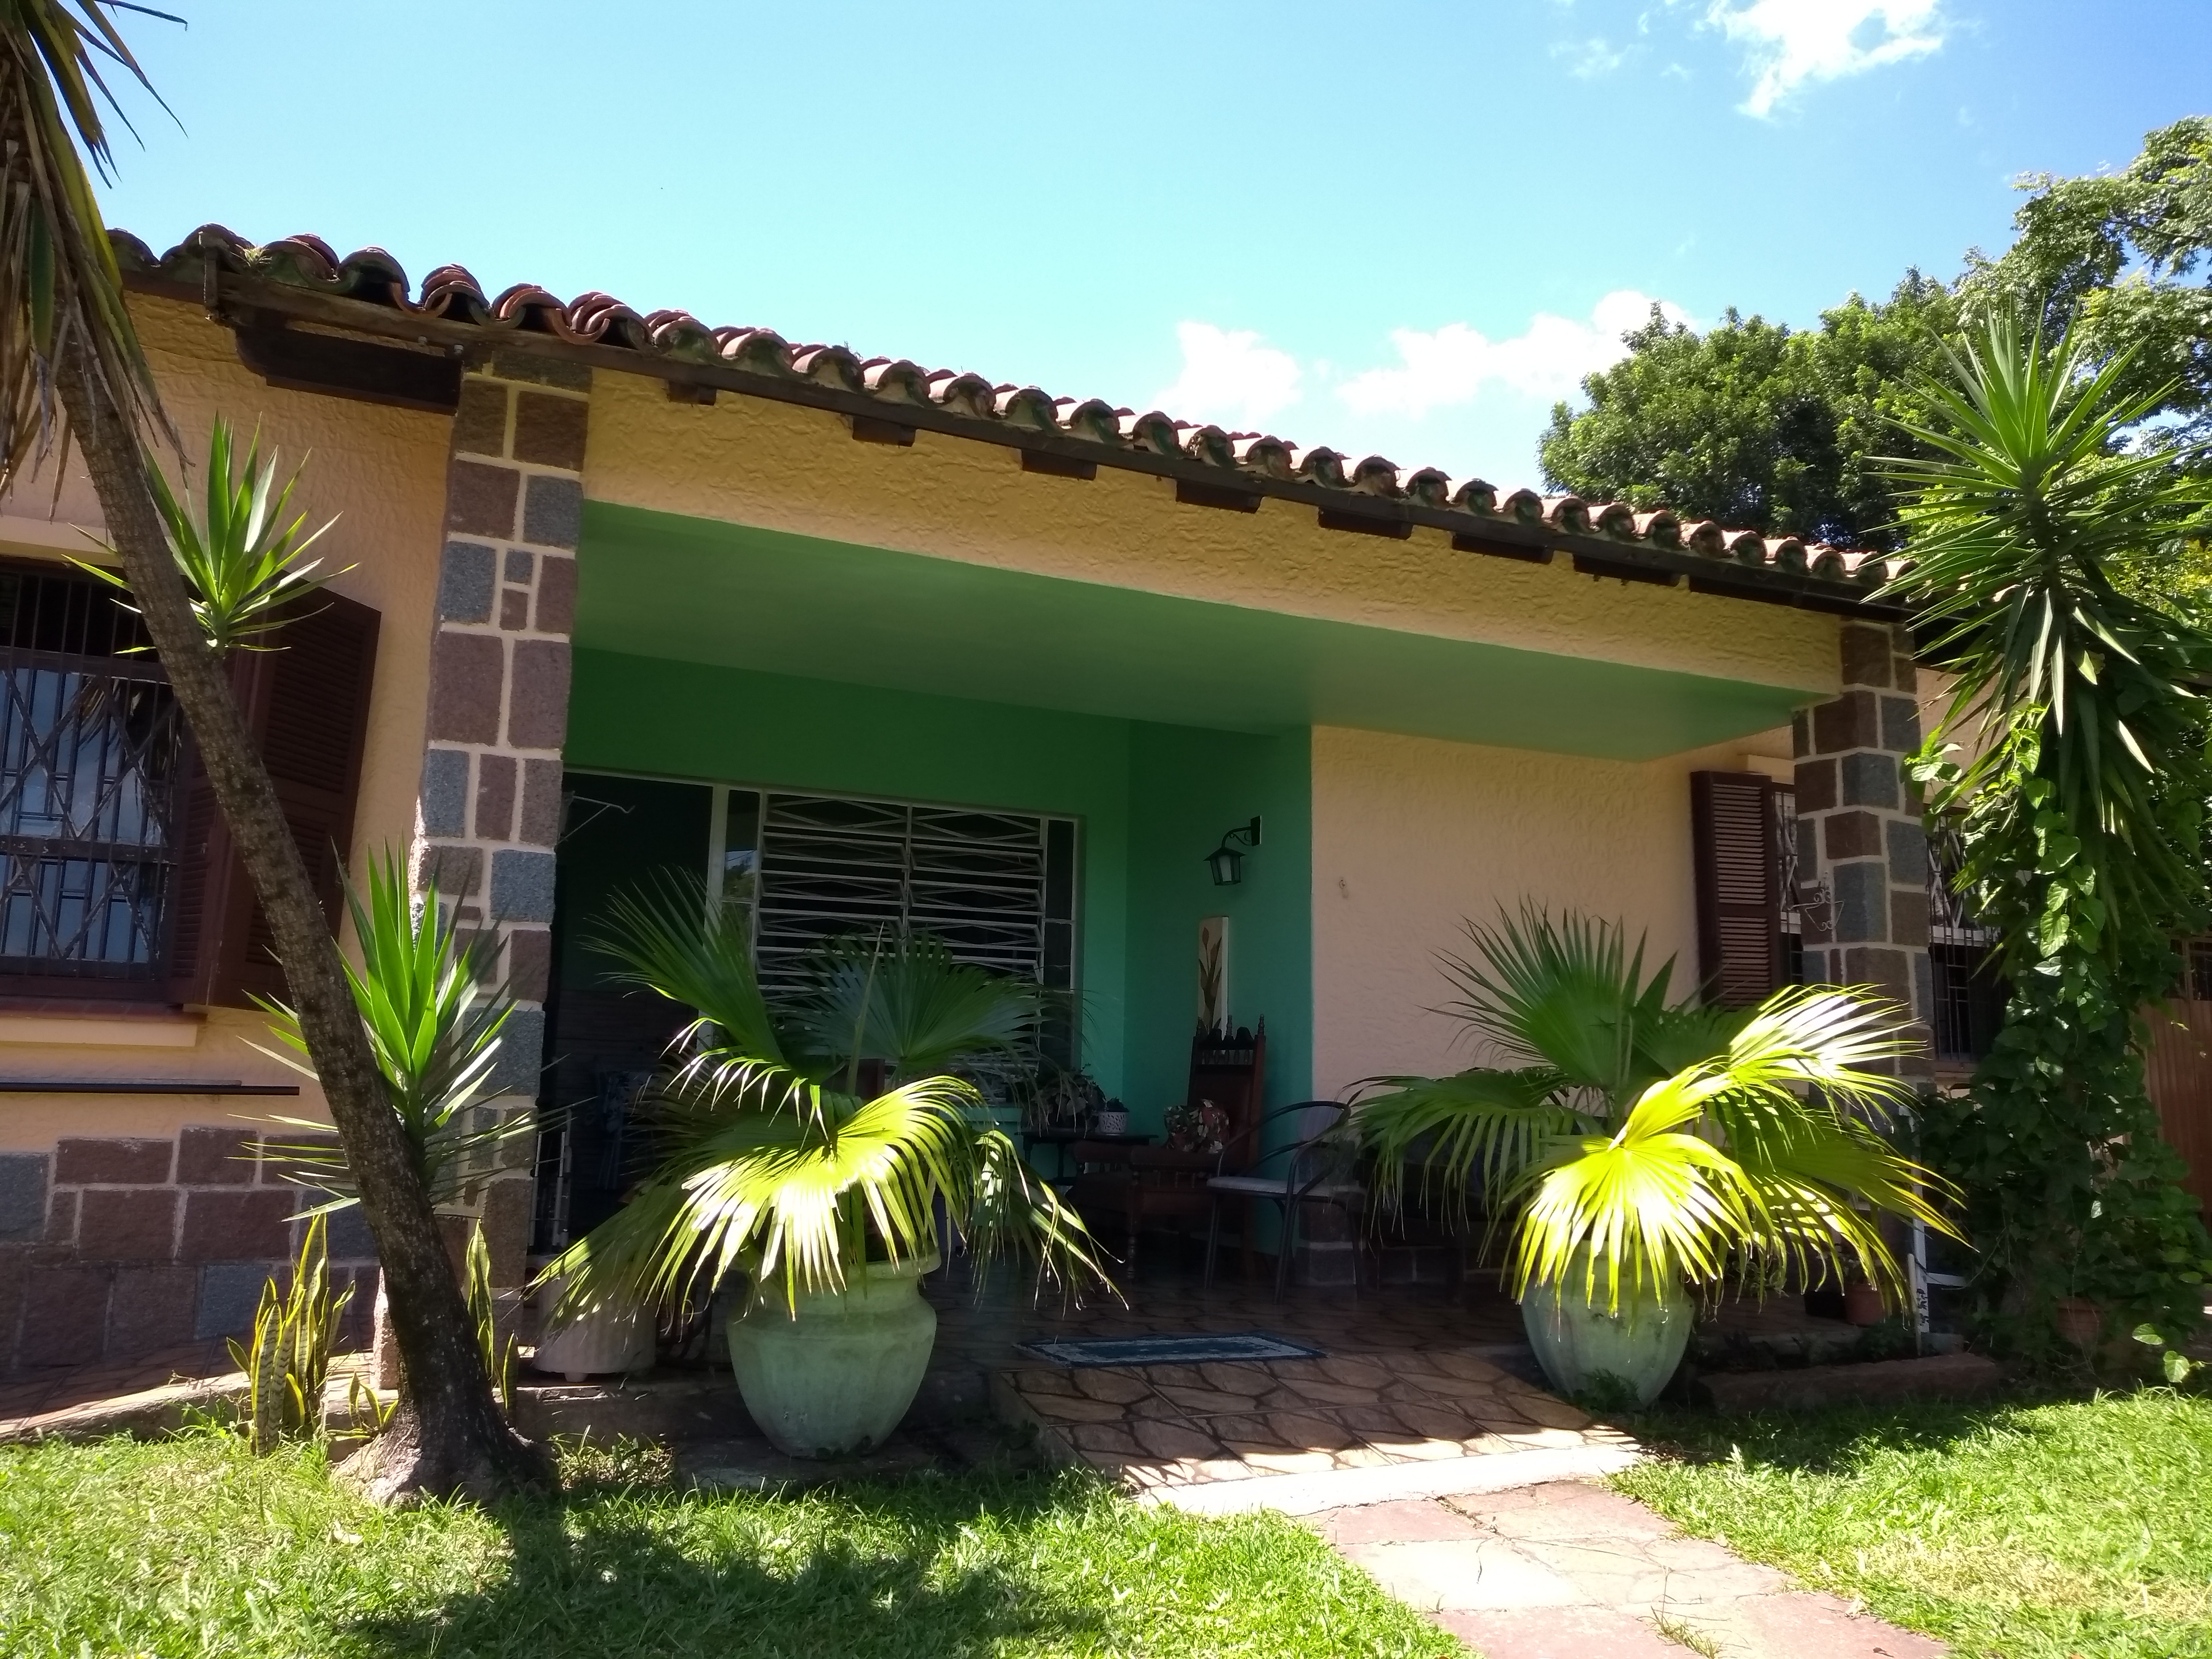 Institucional - Casas de Belém - Geriatria Zona Sul de Porto Alegre,  Residencial Geriátrico Zona Sul de Porto Alegre